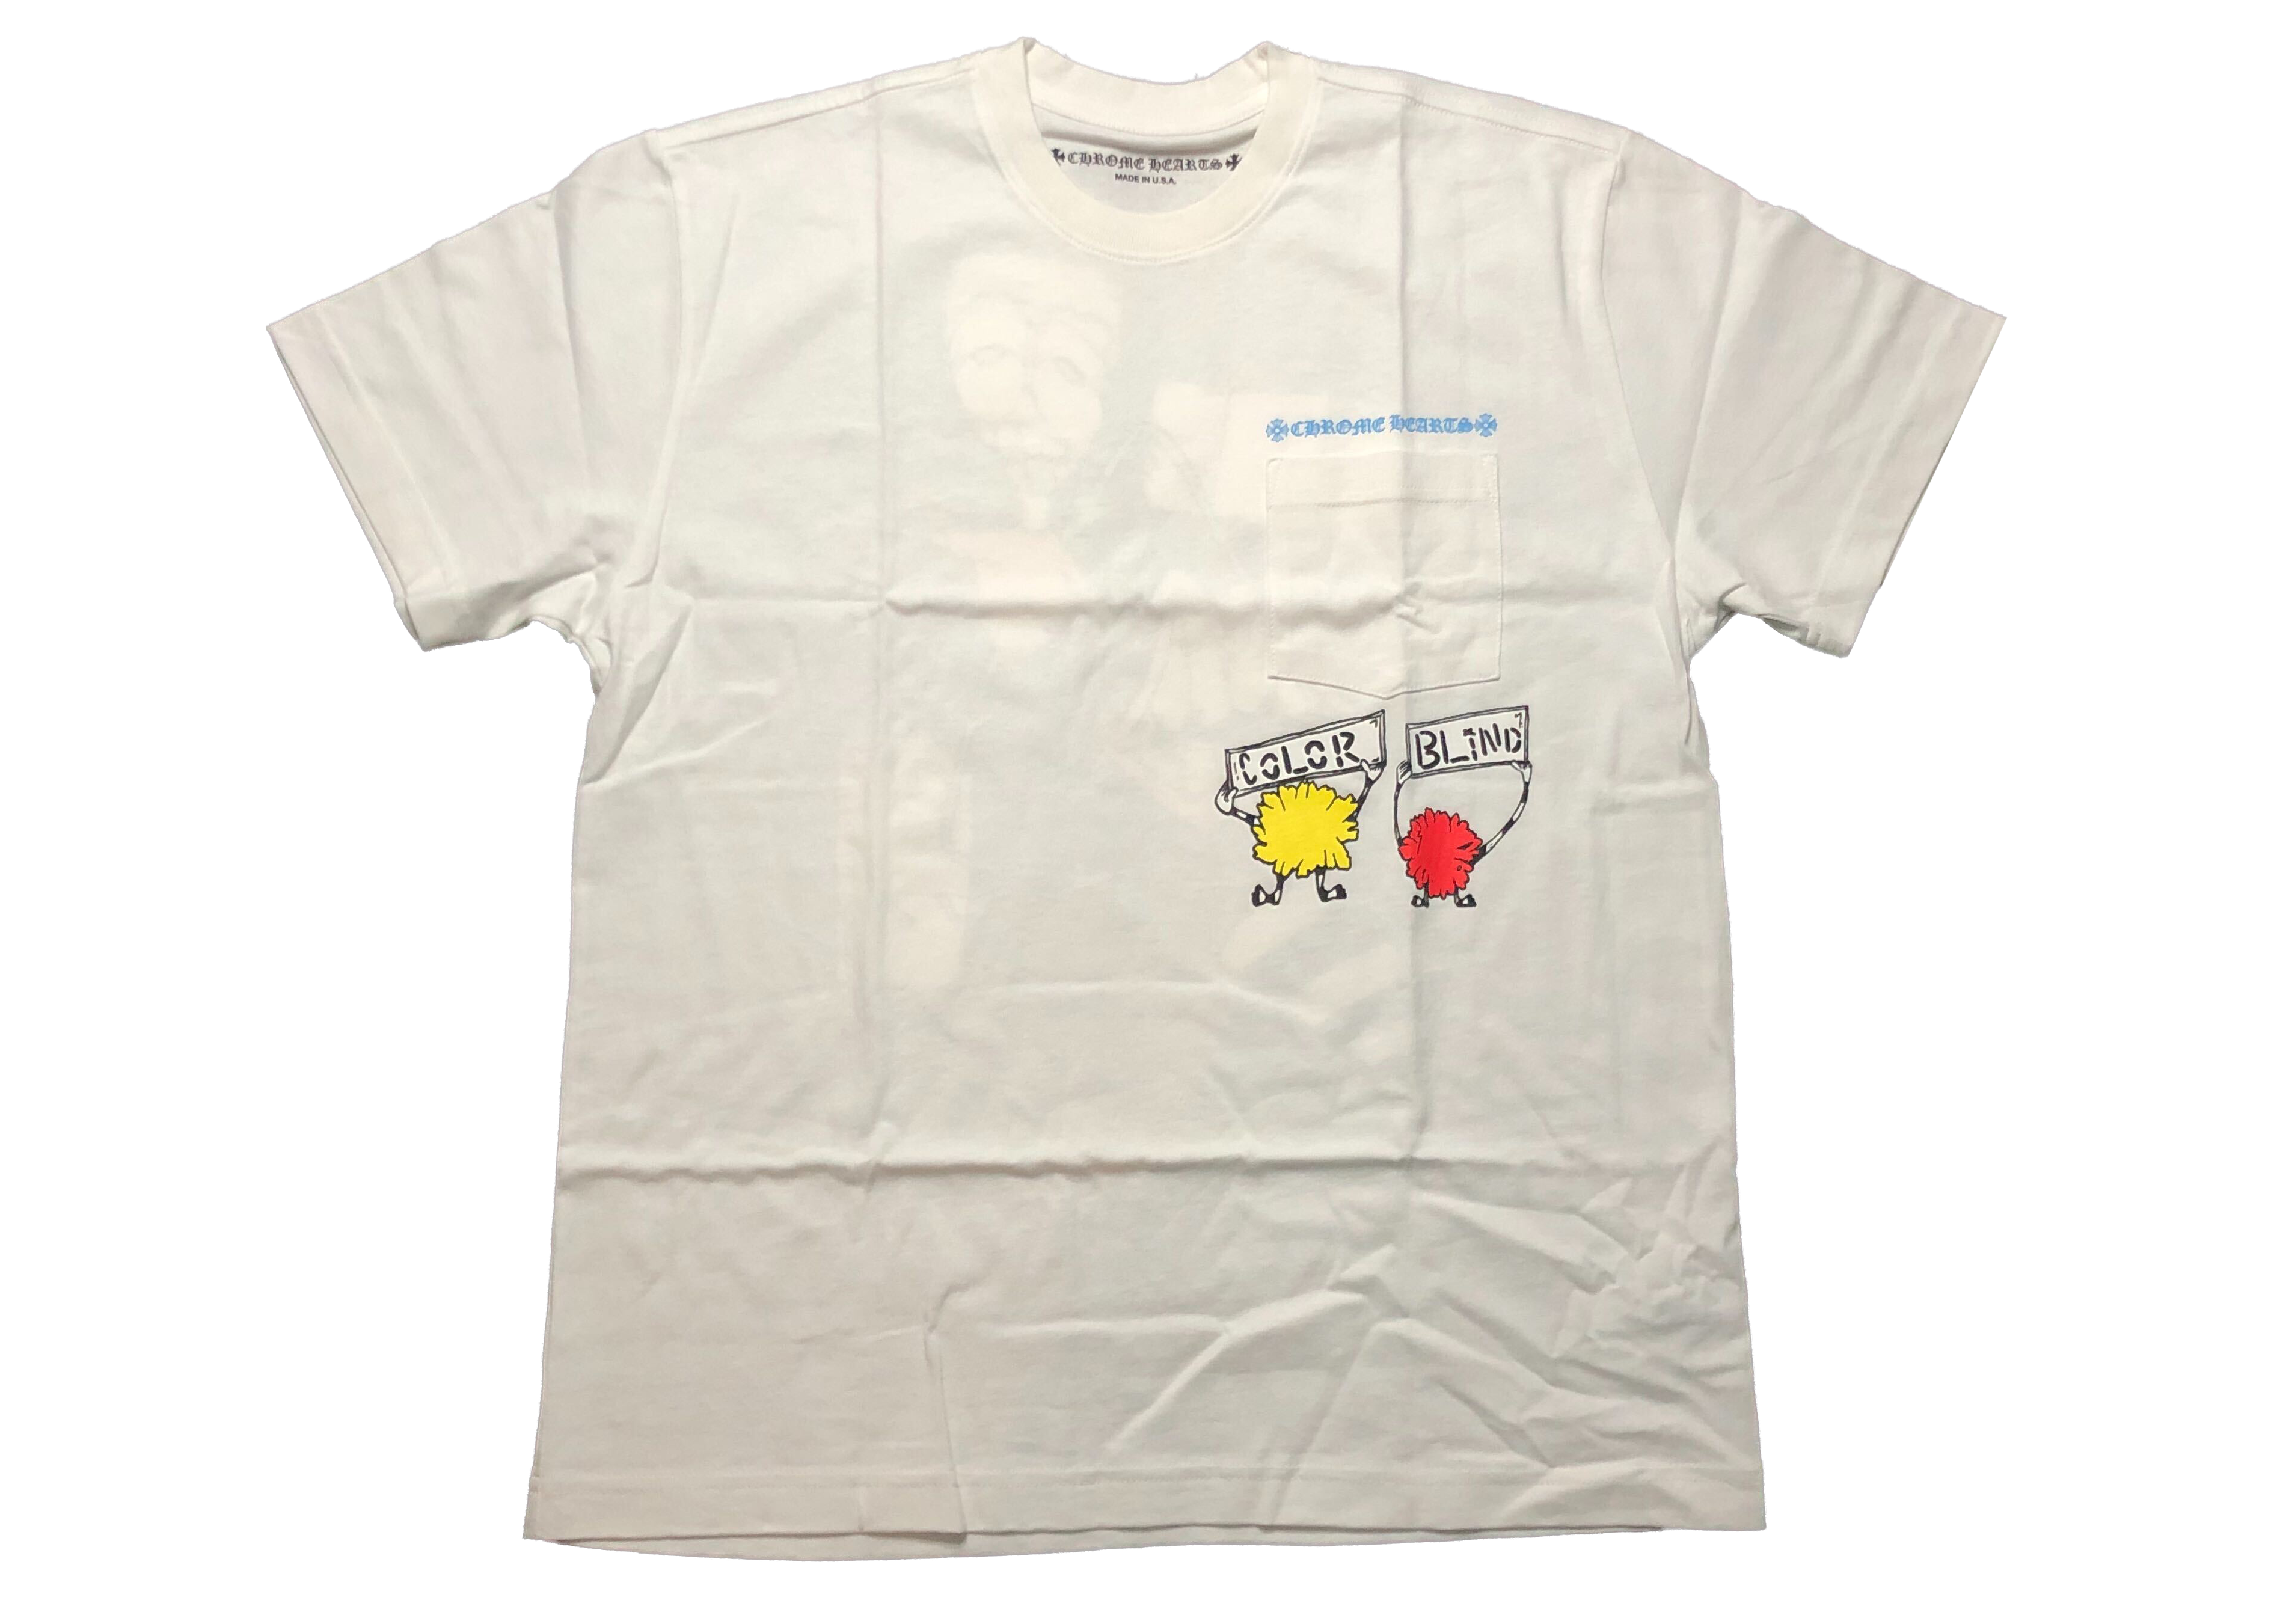 Chrome Hearts Matty Boy Retro Cycle T-Shirt White Men's - US